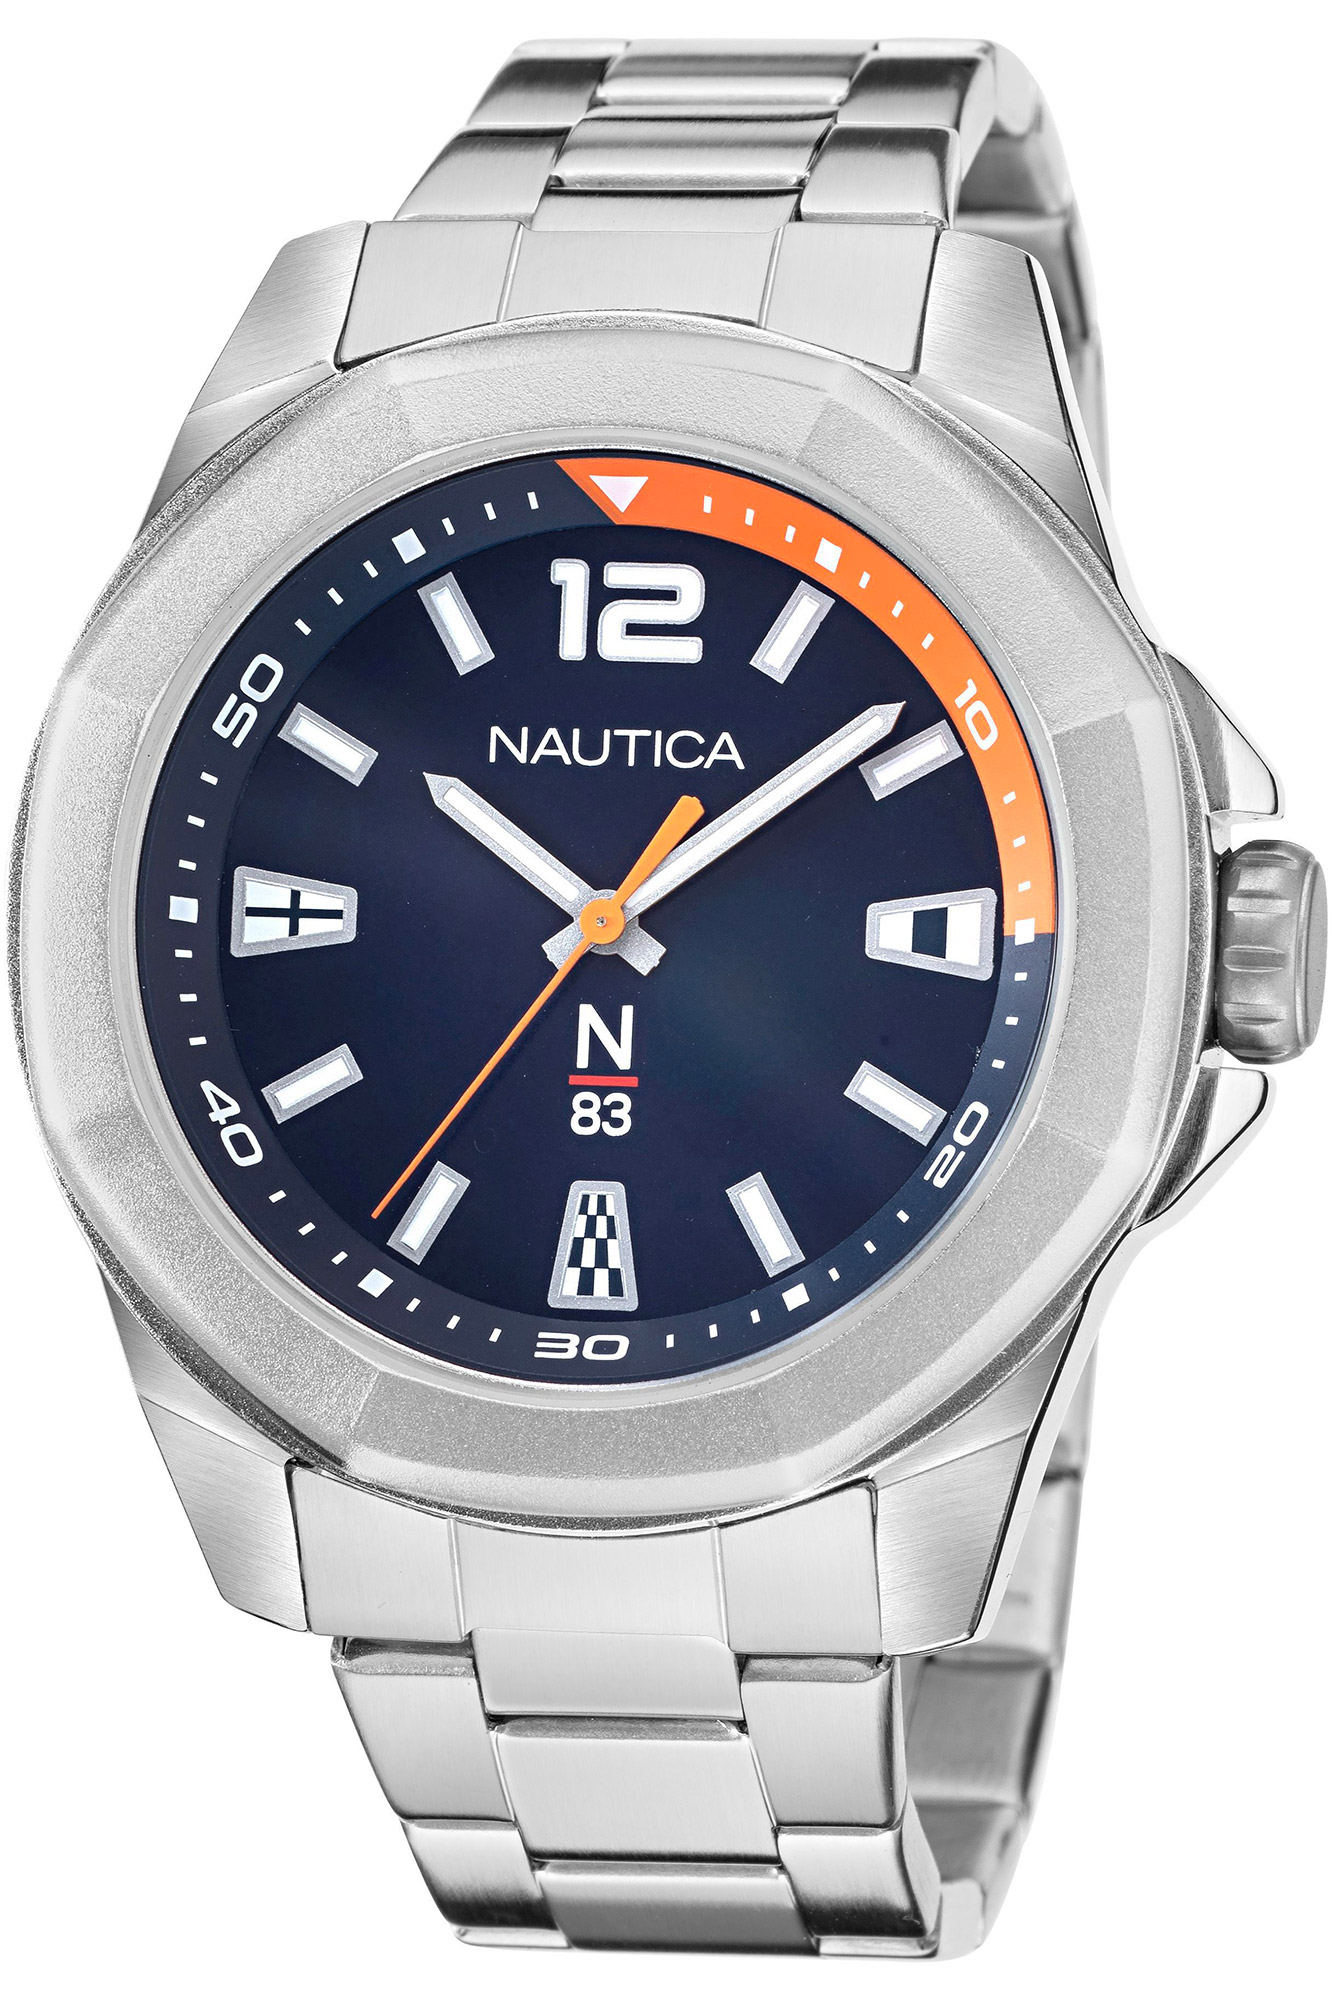 Watch Nautica naptbf103